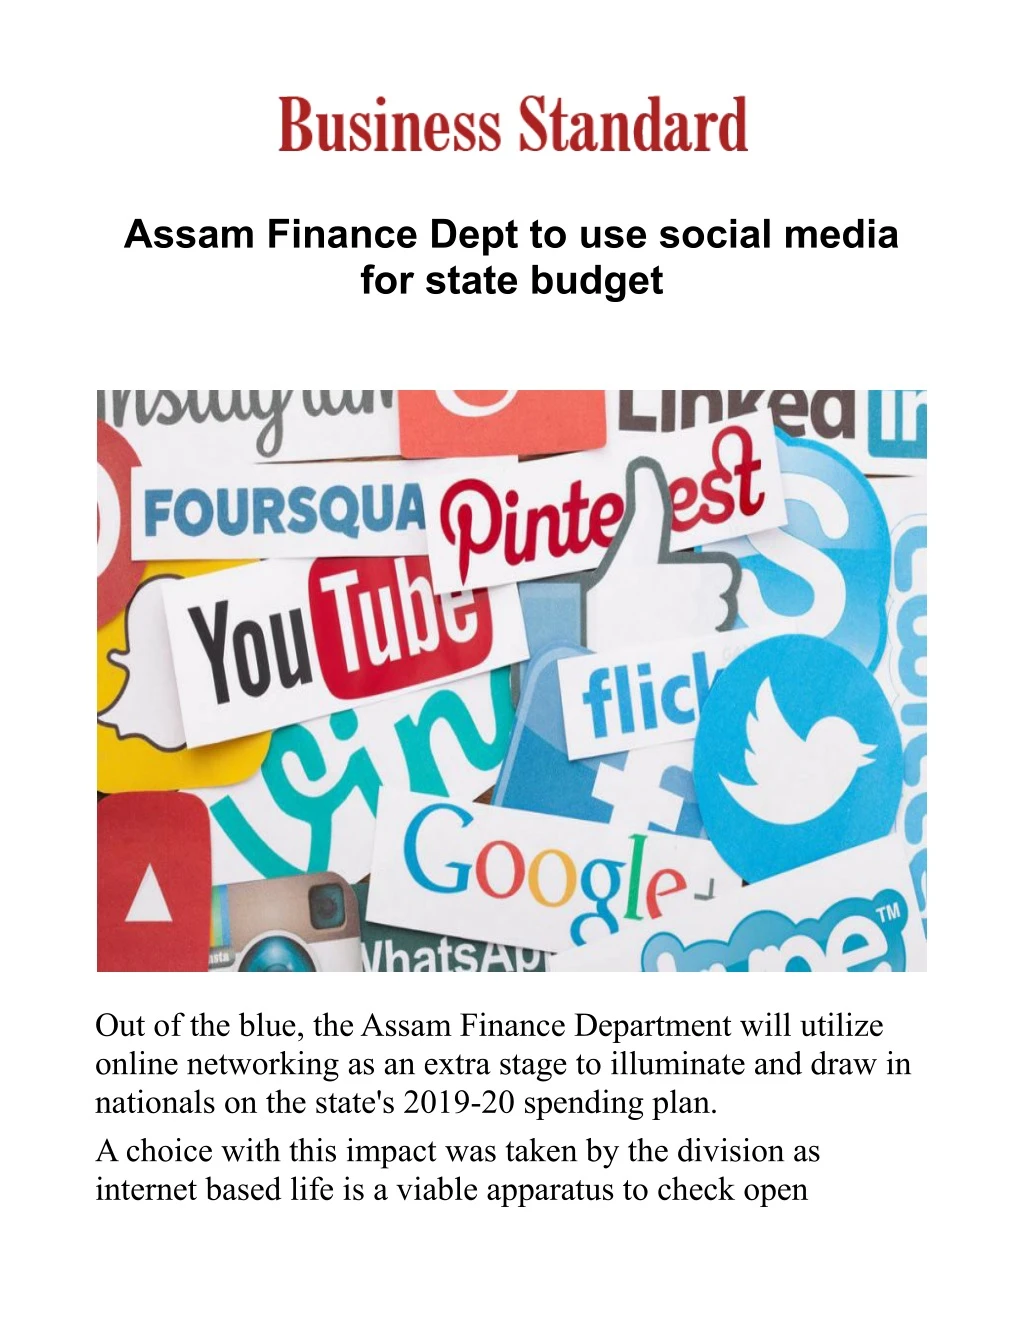 assam finance dept to use social media for state